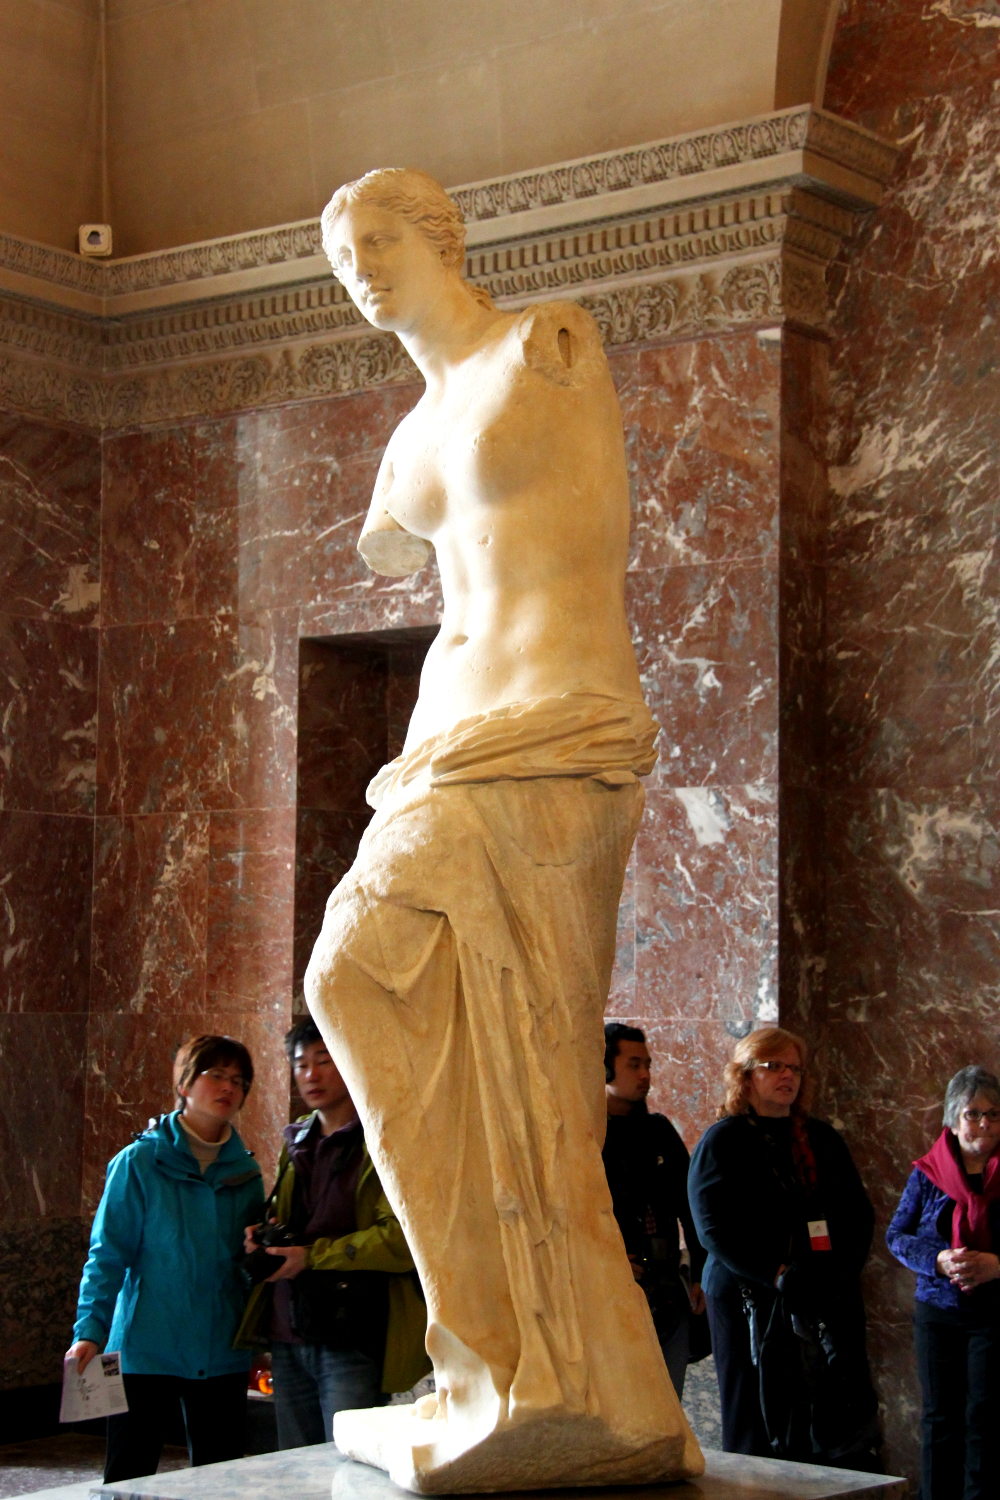 Venus de Milo, Louvre Museum, Paris